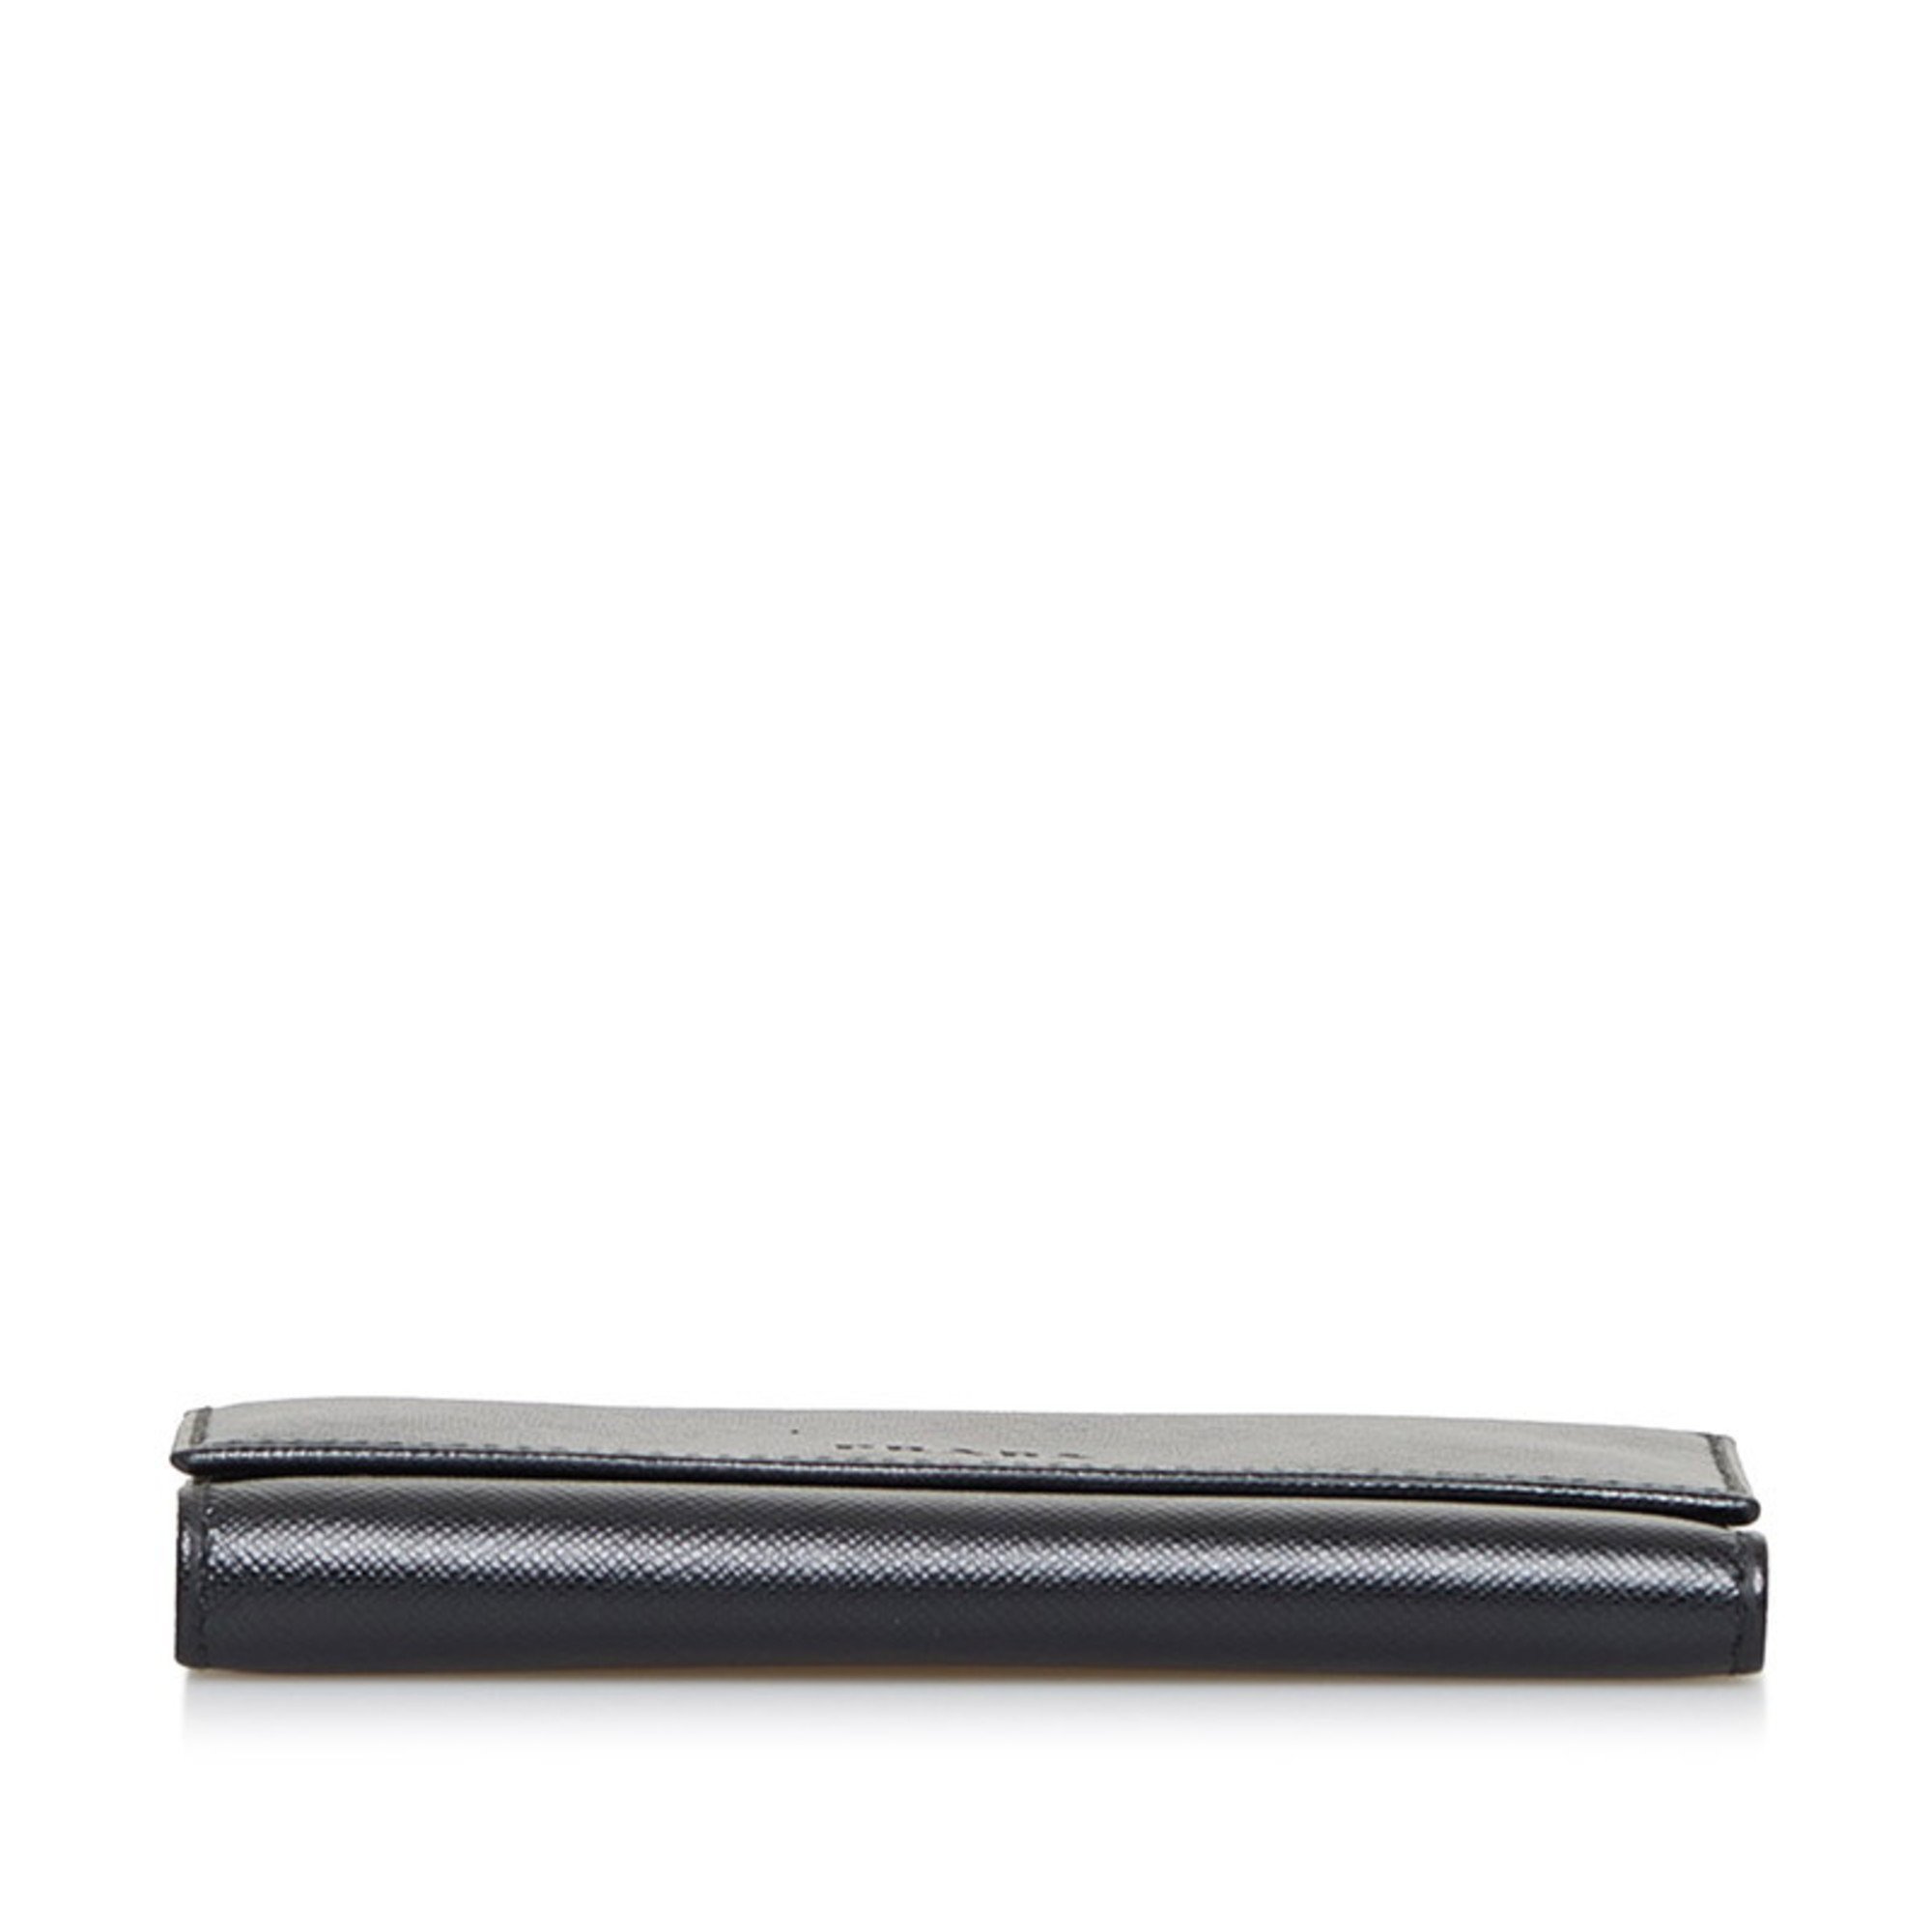 Prada Saffiano 6-ring key case, black leather, for women, PRADA